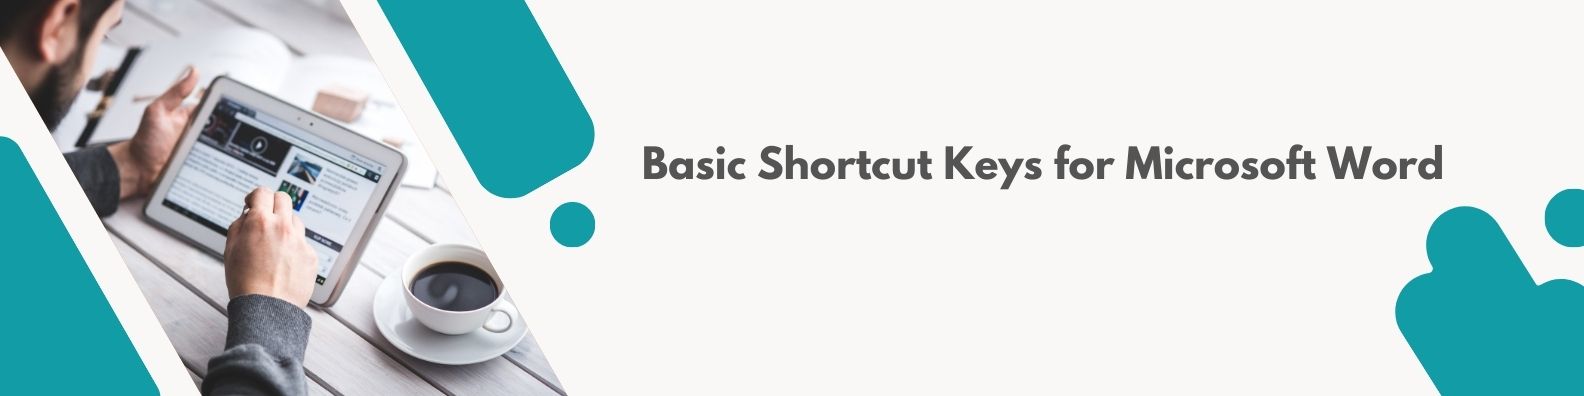 Basic Shortcut Keys for Microsoft Word